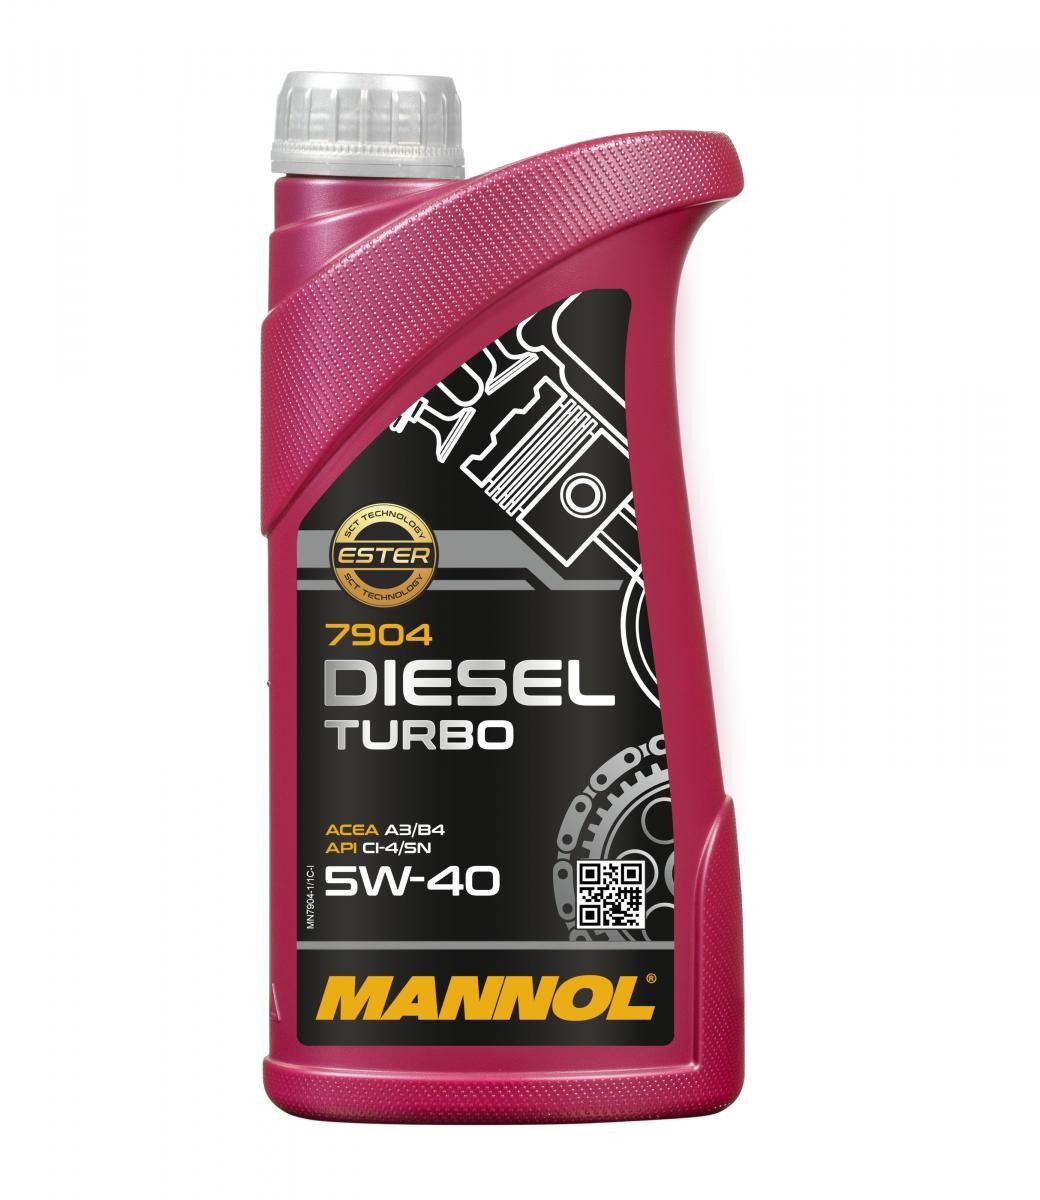 5W40 MANNOL DIESEL TURBO 5W-40, 1l, Synthetiköl Motoröl MN7904-1 kaufen